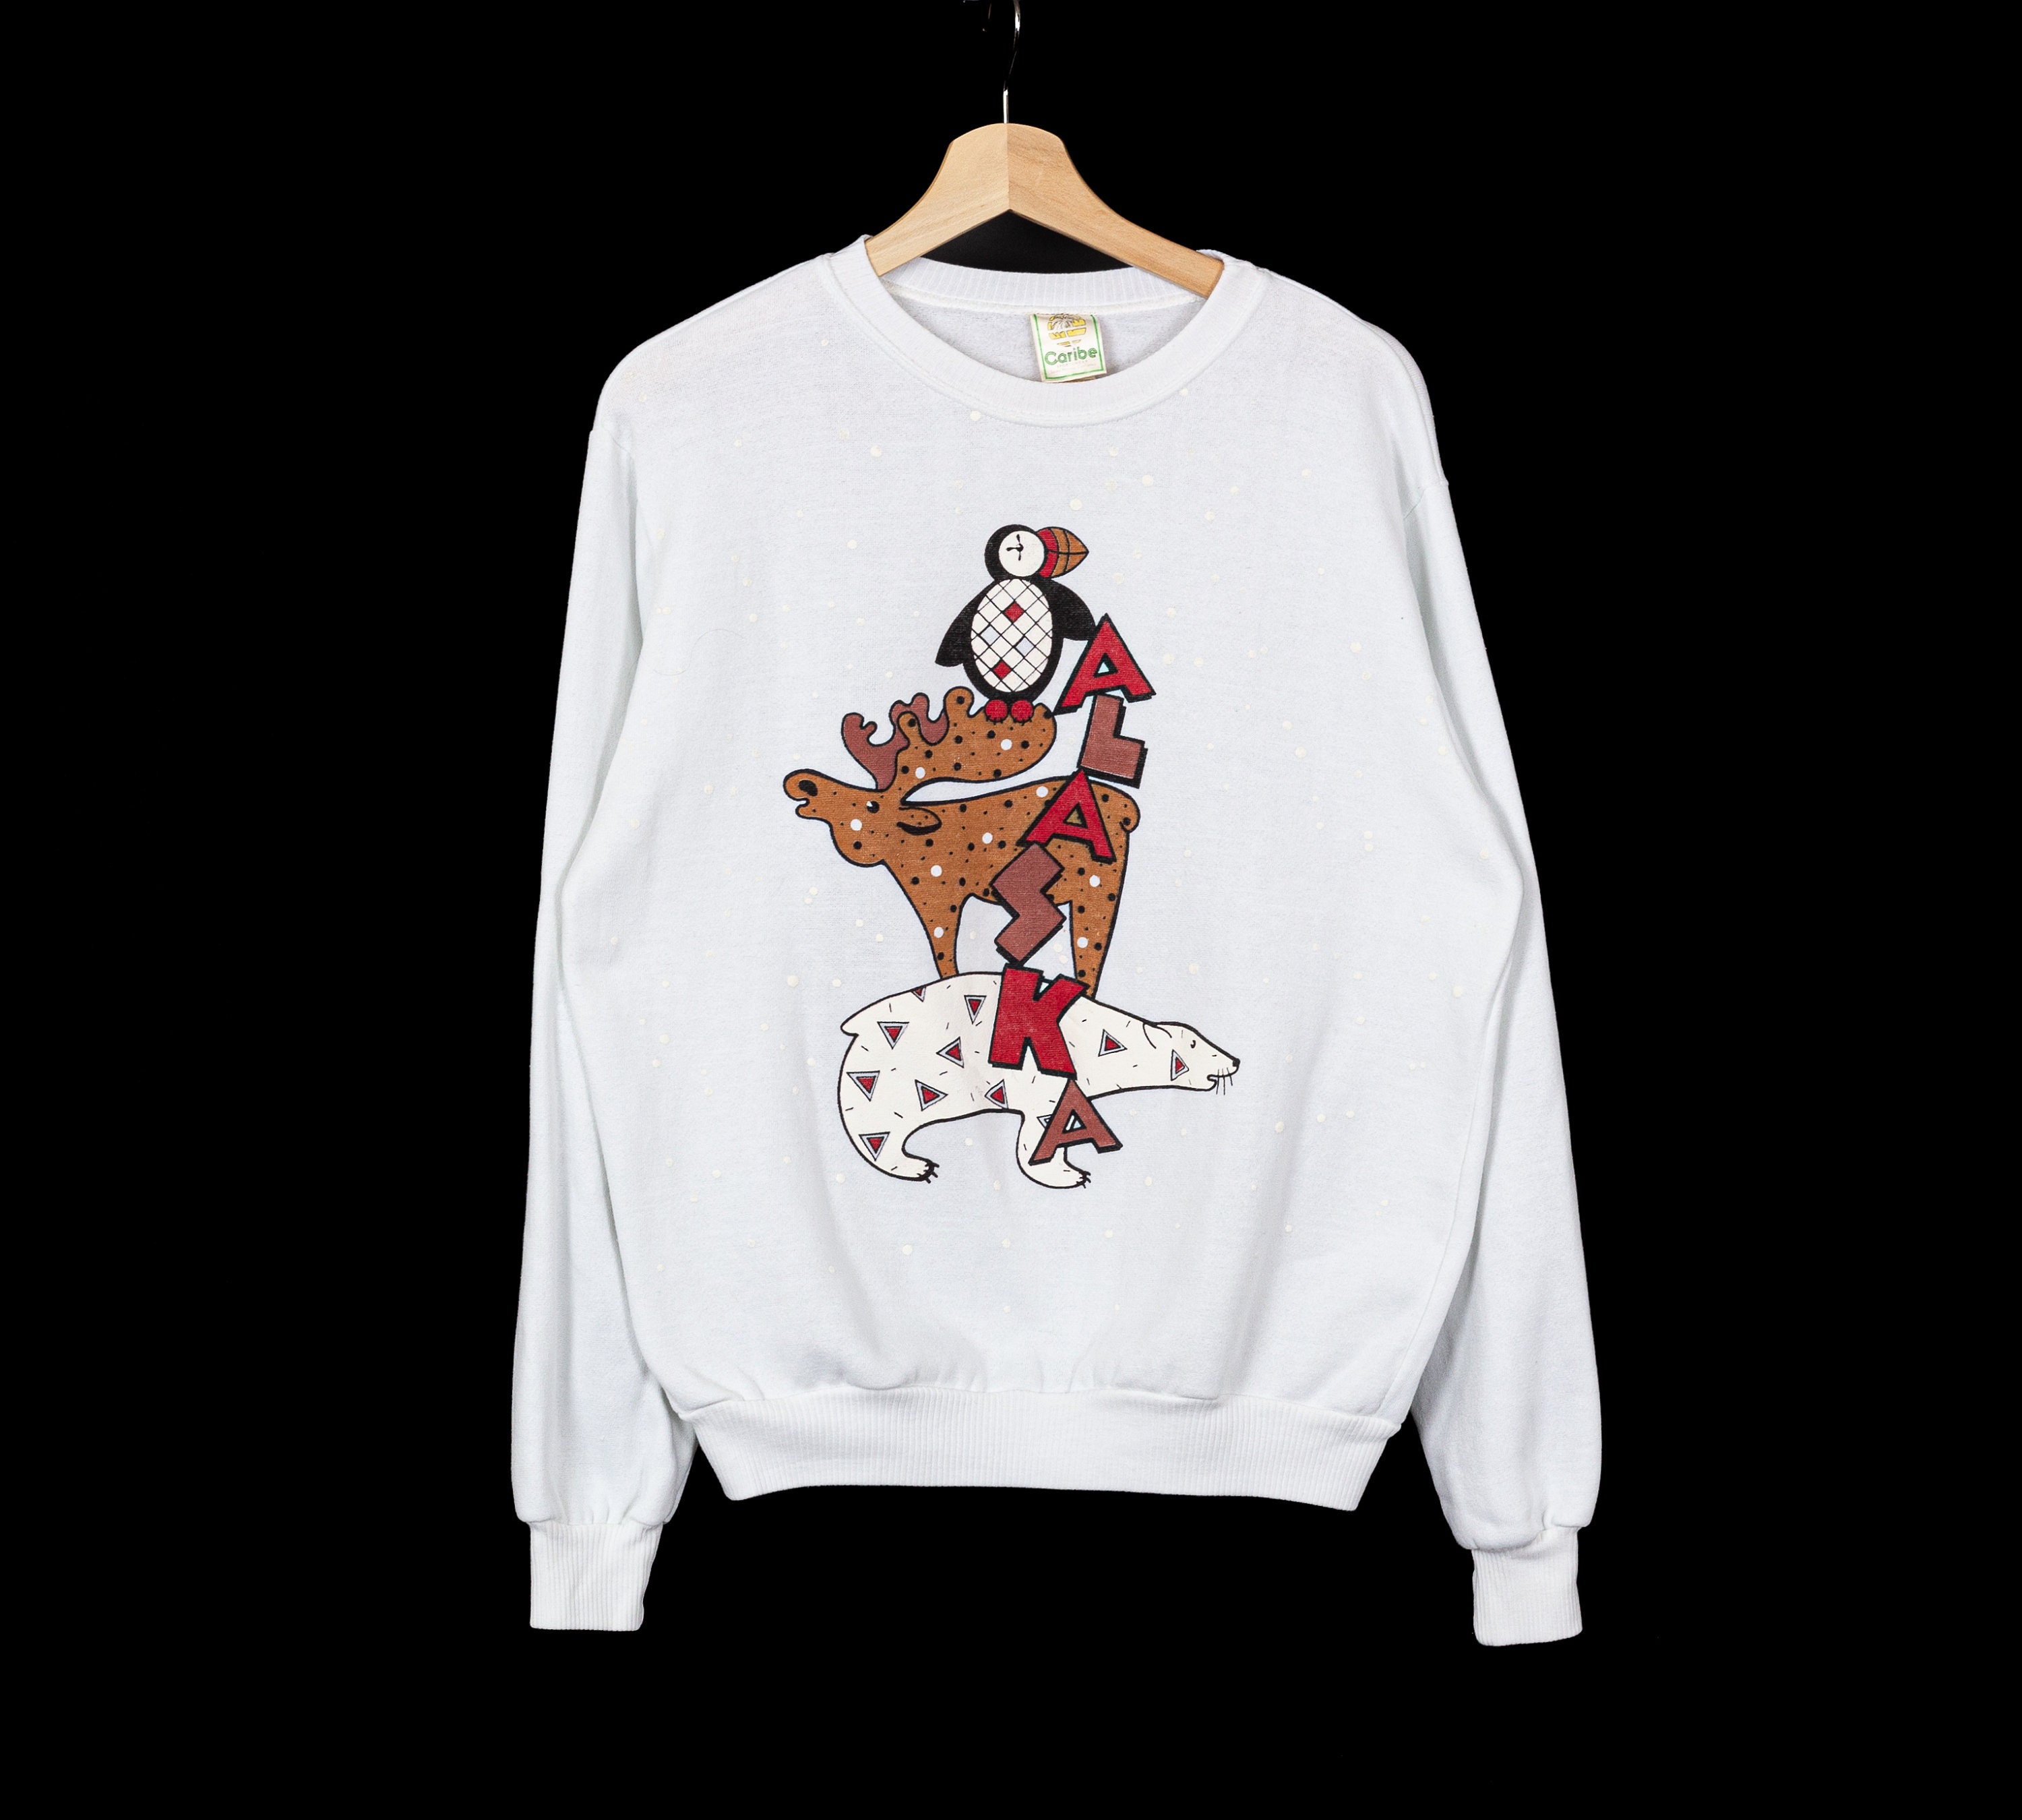 Vtg Alaska Sweatshirt Medium Vintage Moose Sweater Jumper 